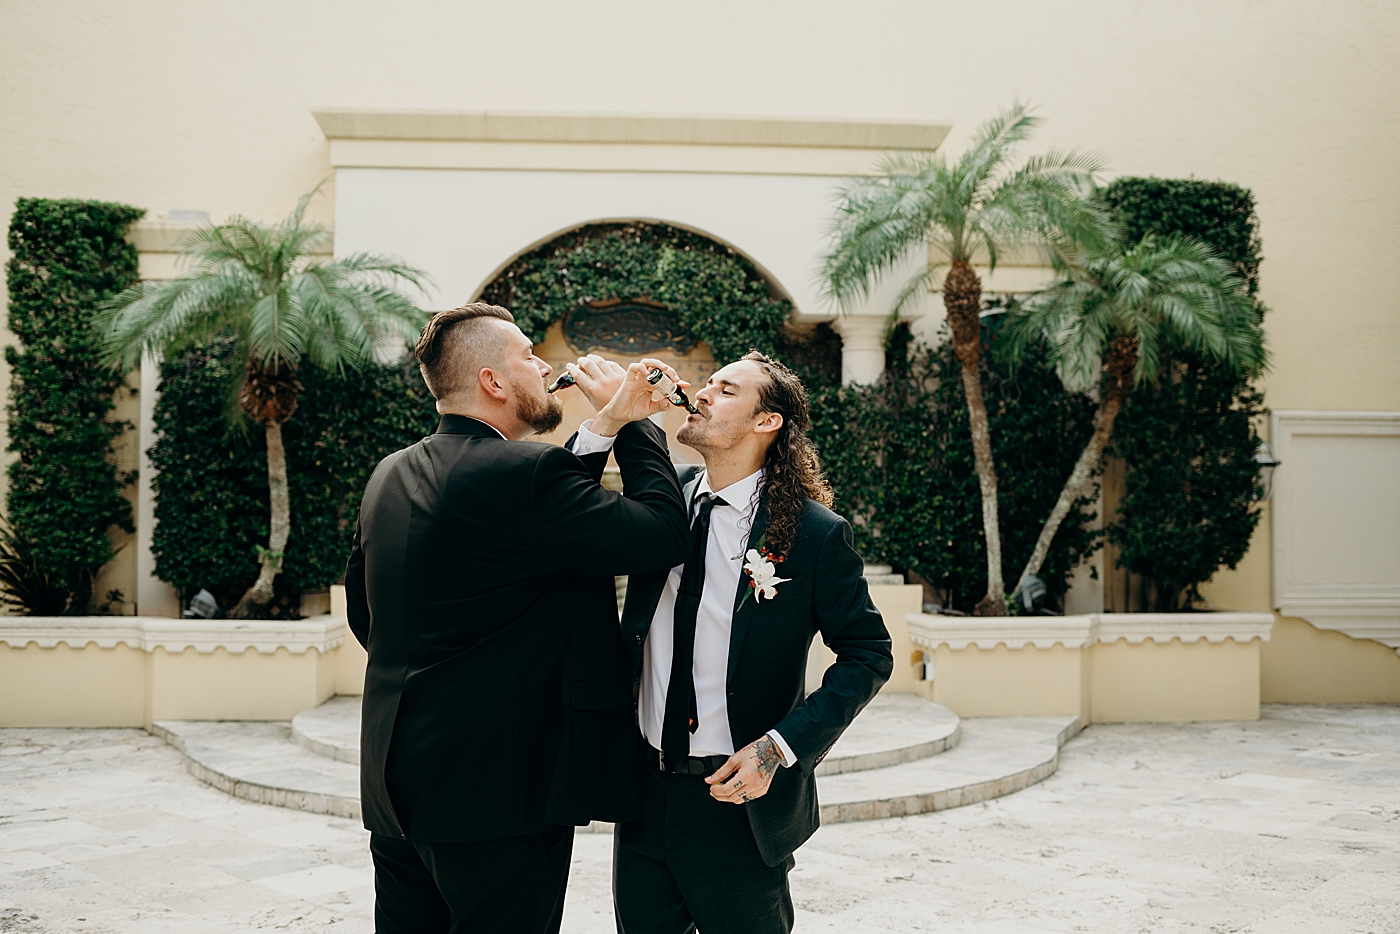 Groom and groomsmen having a drink interlocked arms Benvenuto Restaurant Wedding Photography captured by South Florida Wedding Photographer Maggie Alvarez Photography